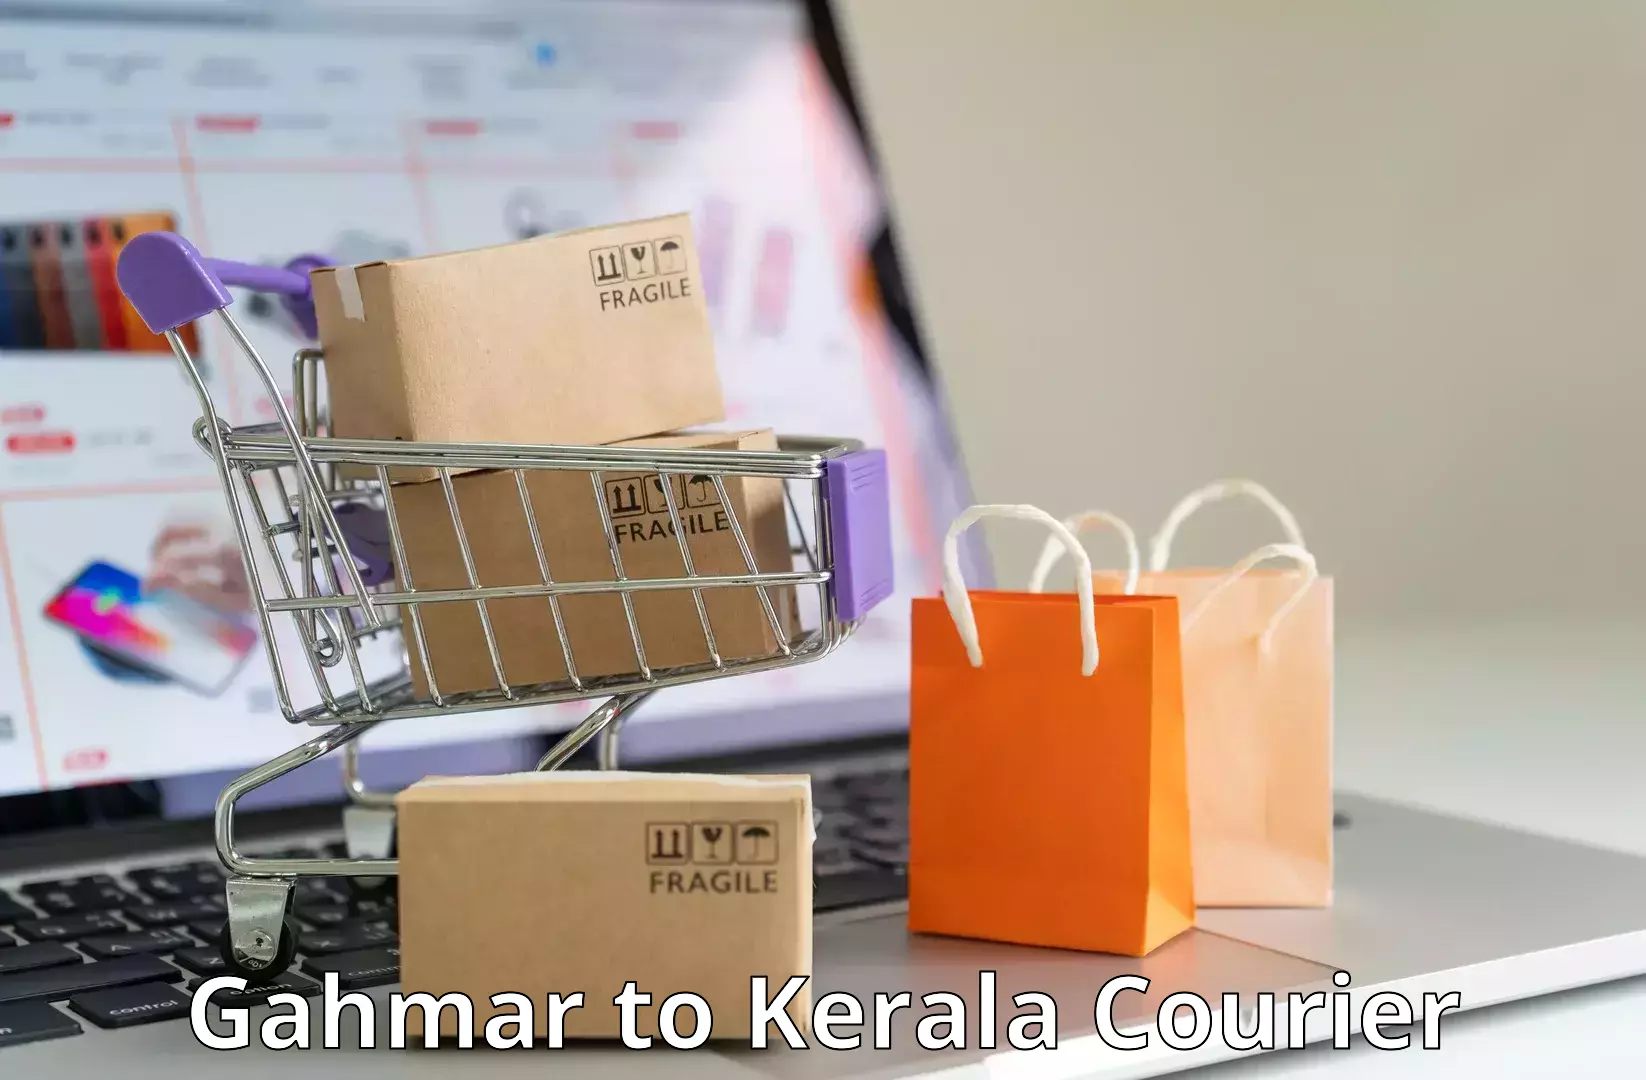 Express mail solutions Gahmar to Koothattukulam